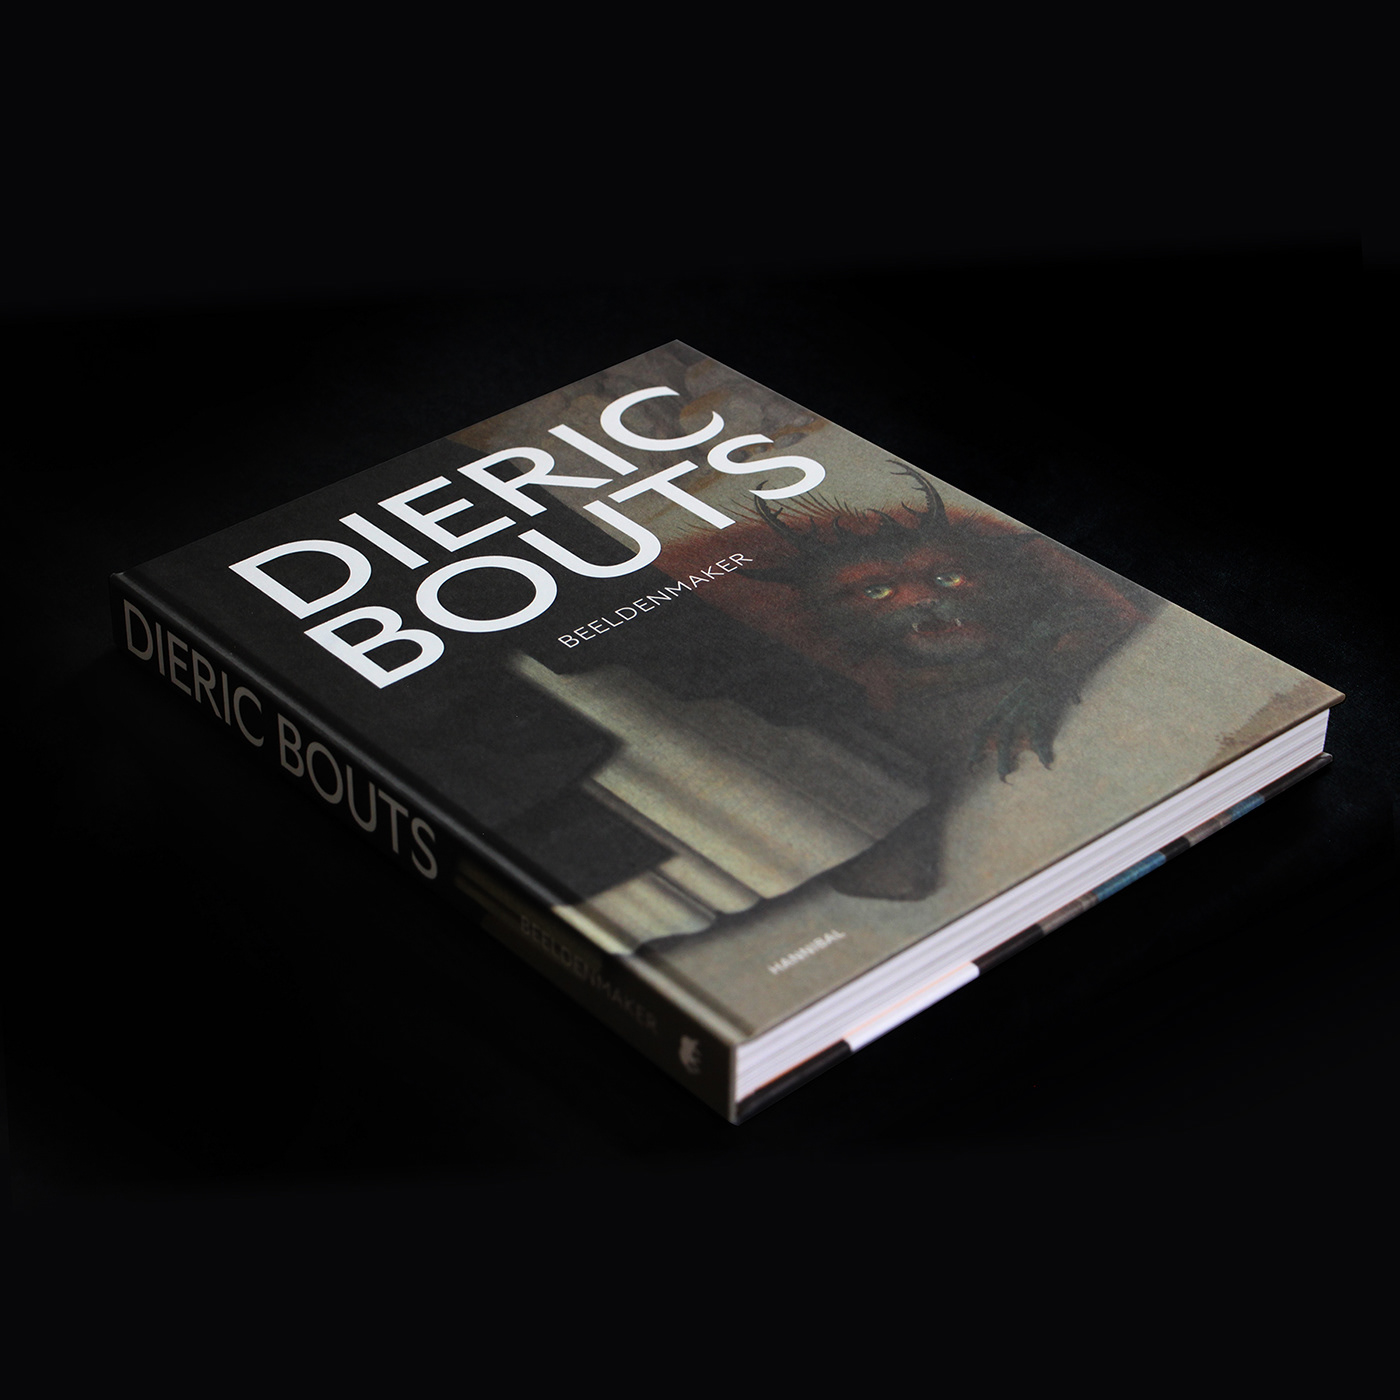 Leuven Bookdesign artbook coverdesign editorial design  BOUTS  diericbouts museumm